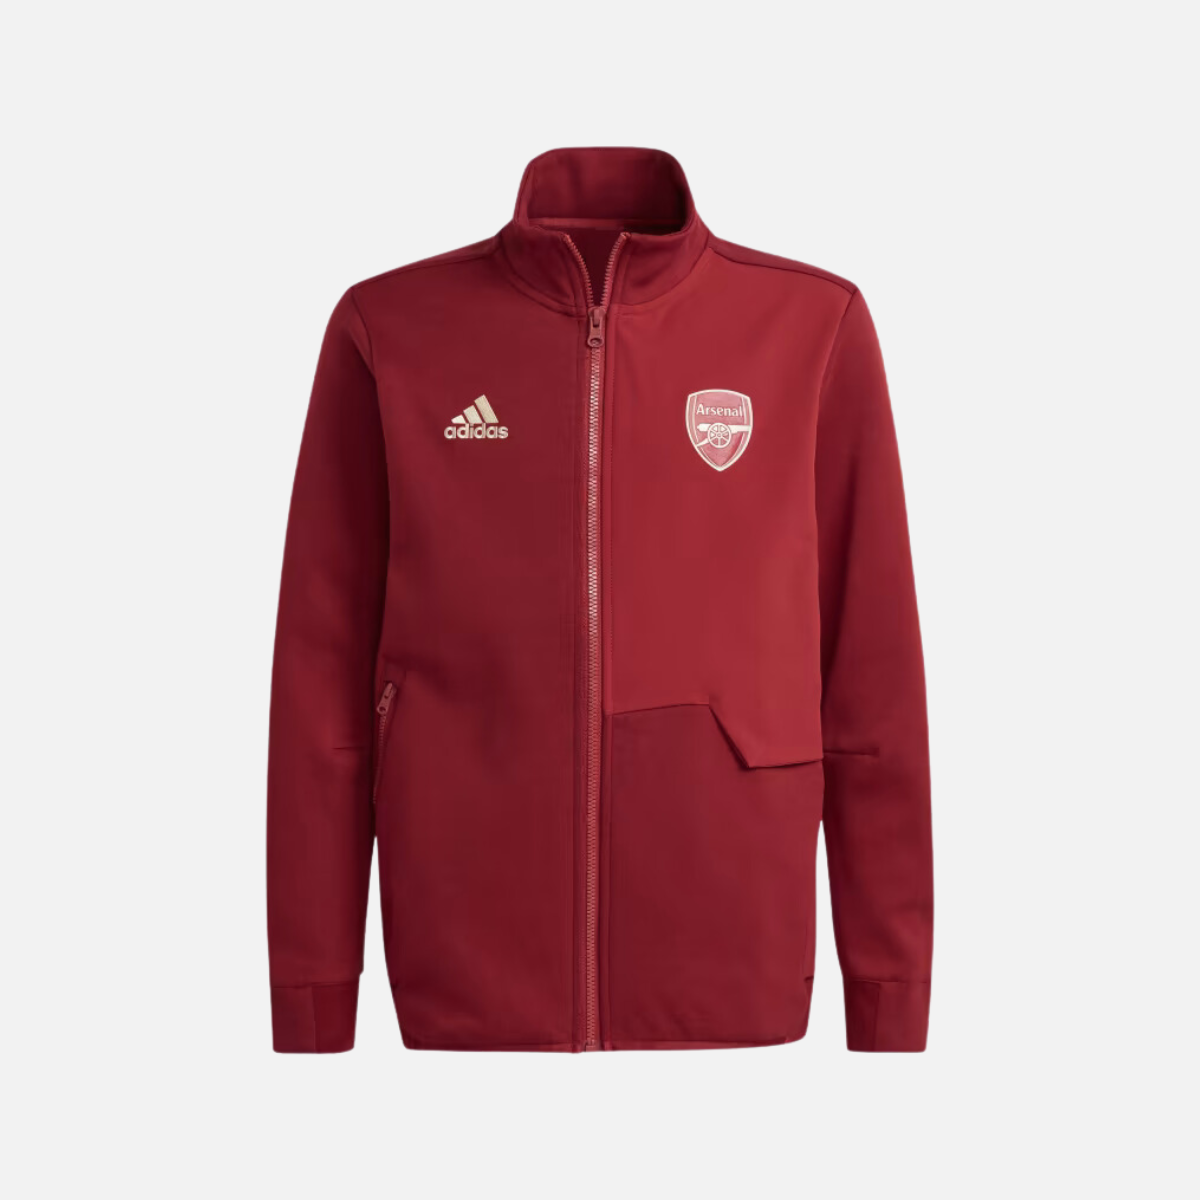 Adidas Arsenal Anthem Unisex Kids Jacket (7-16 Years) -Craft Red